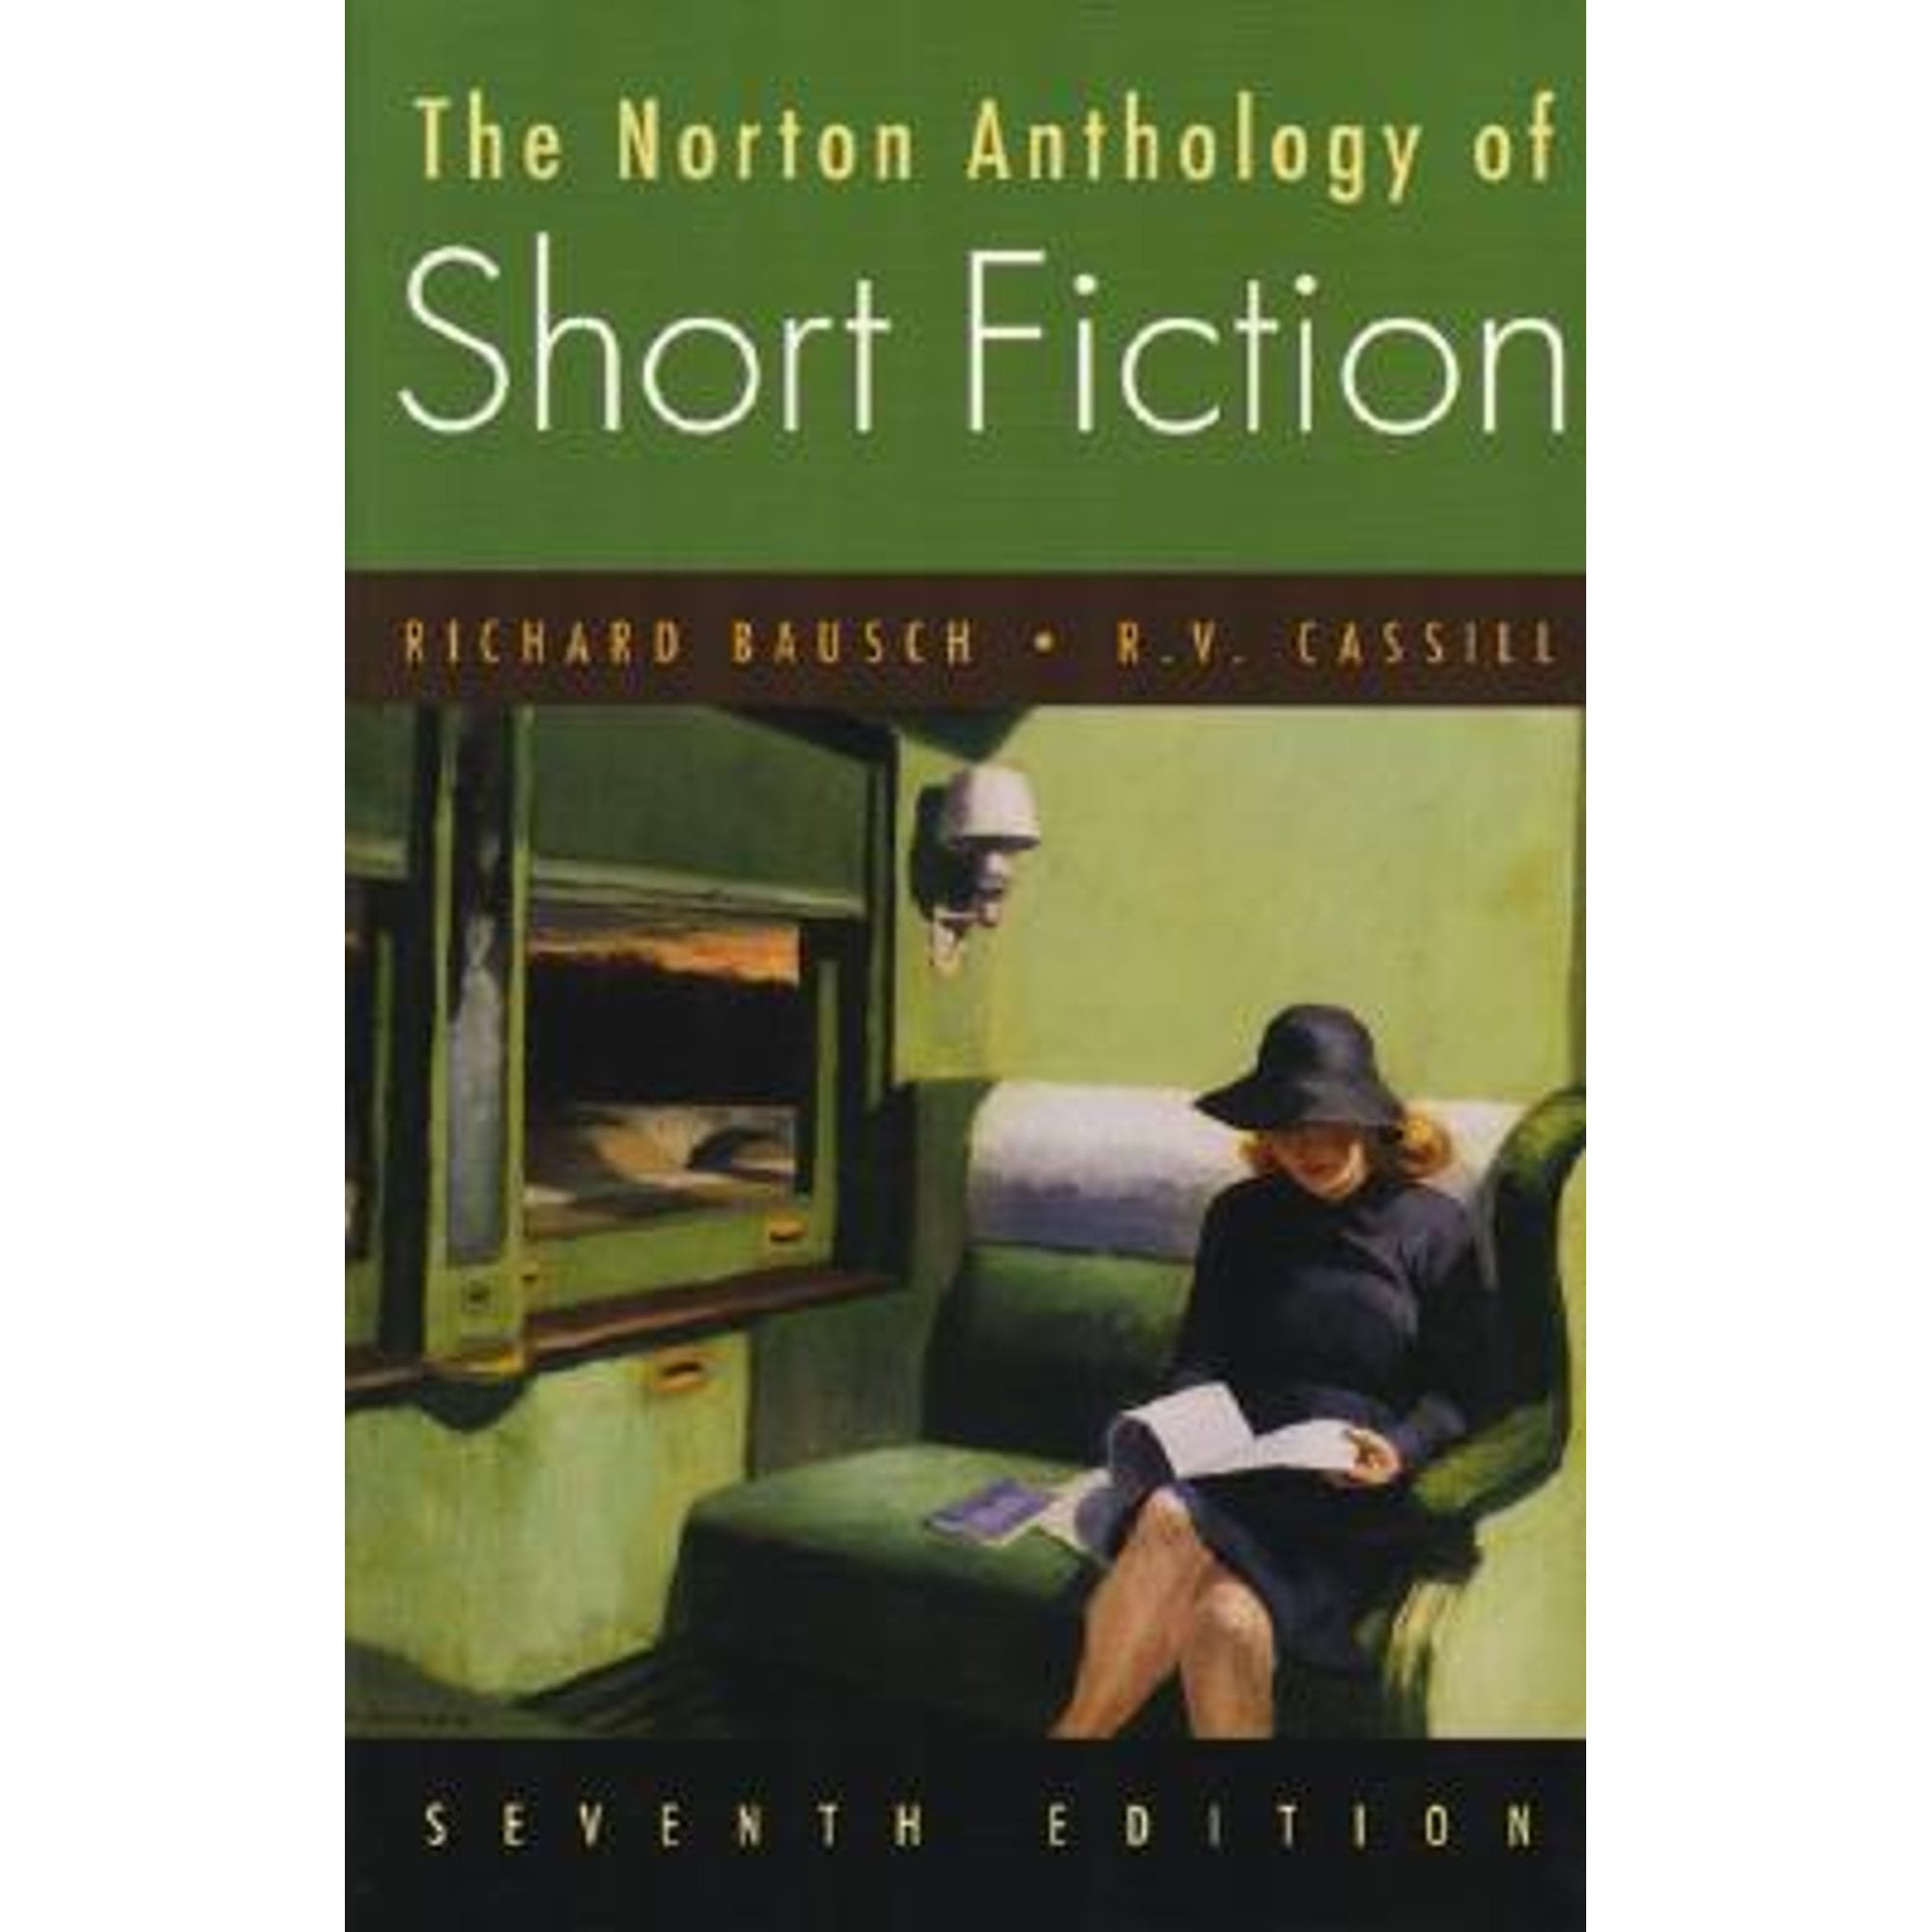 Richard КЕRN асtiоn. Selected short Fiction. The Norton Anthology of American Literature, “Ralph Ellison 1914- 1994. Short fiction